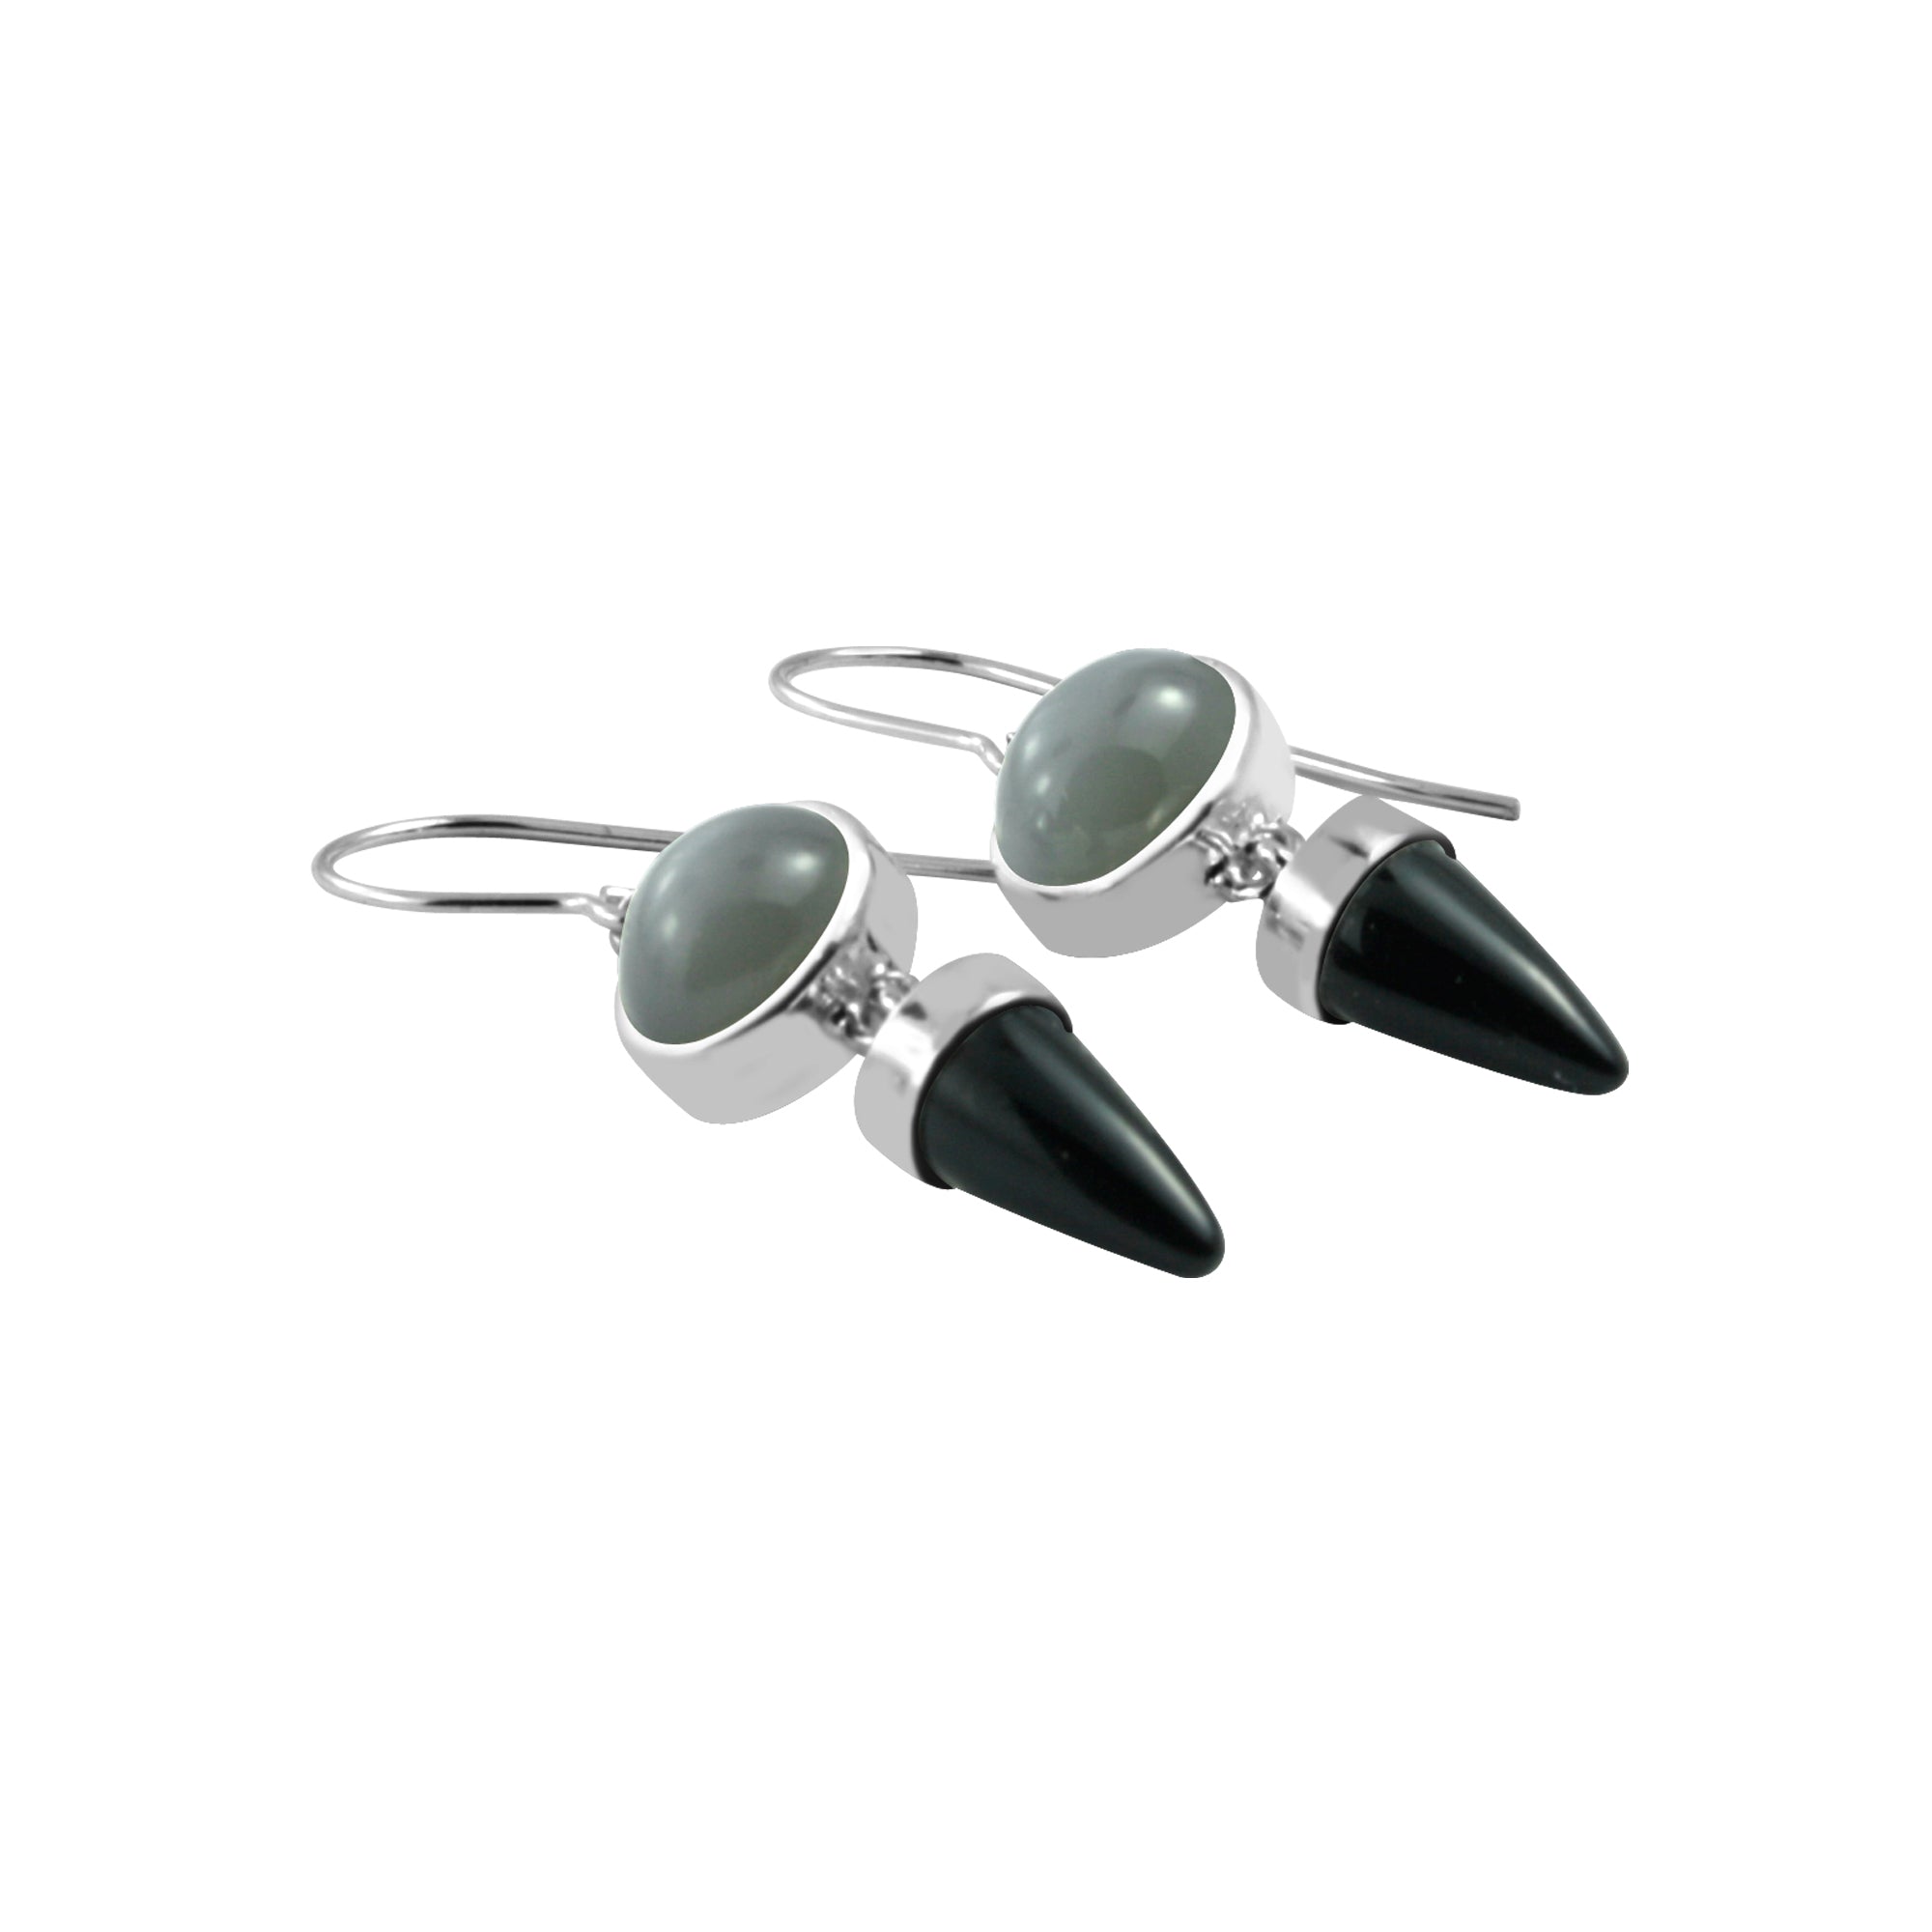 Simpley Elagant Grey moonstone and Onyx drop earringsSilver Earring With Greymoon Oval & Onyx Bullet